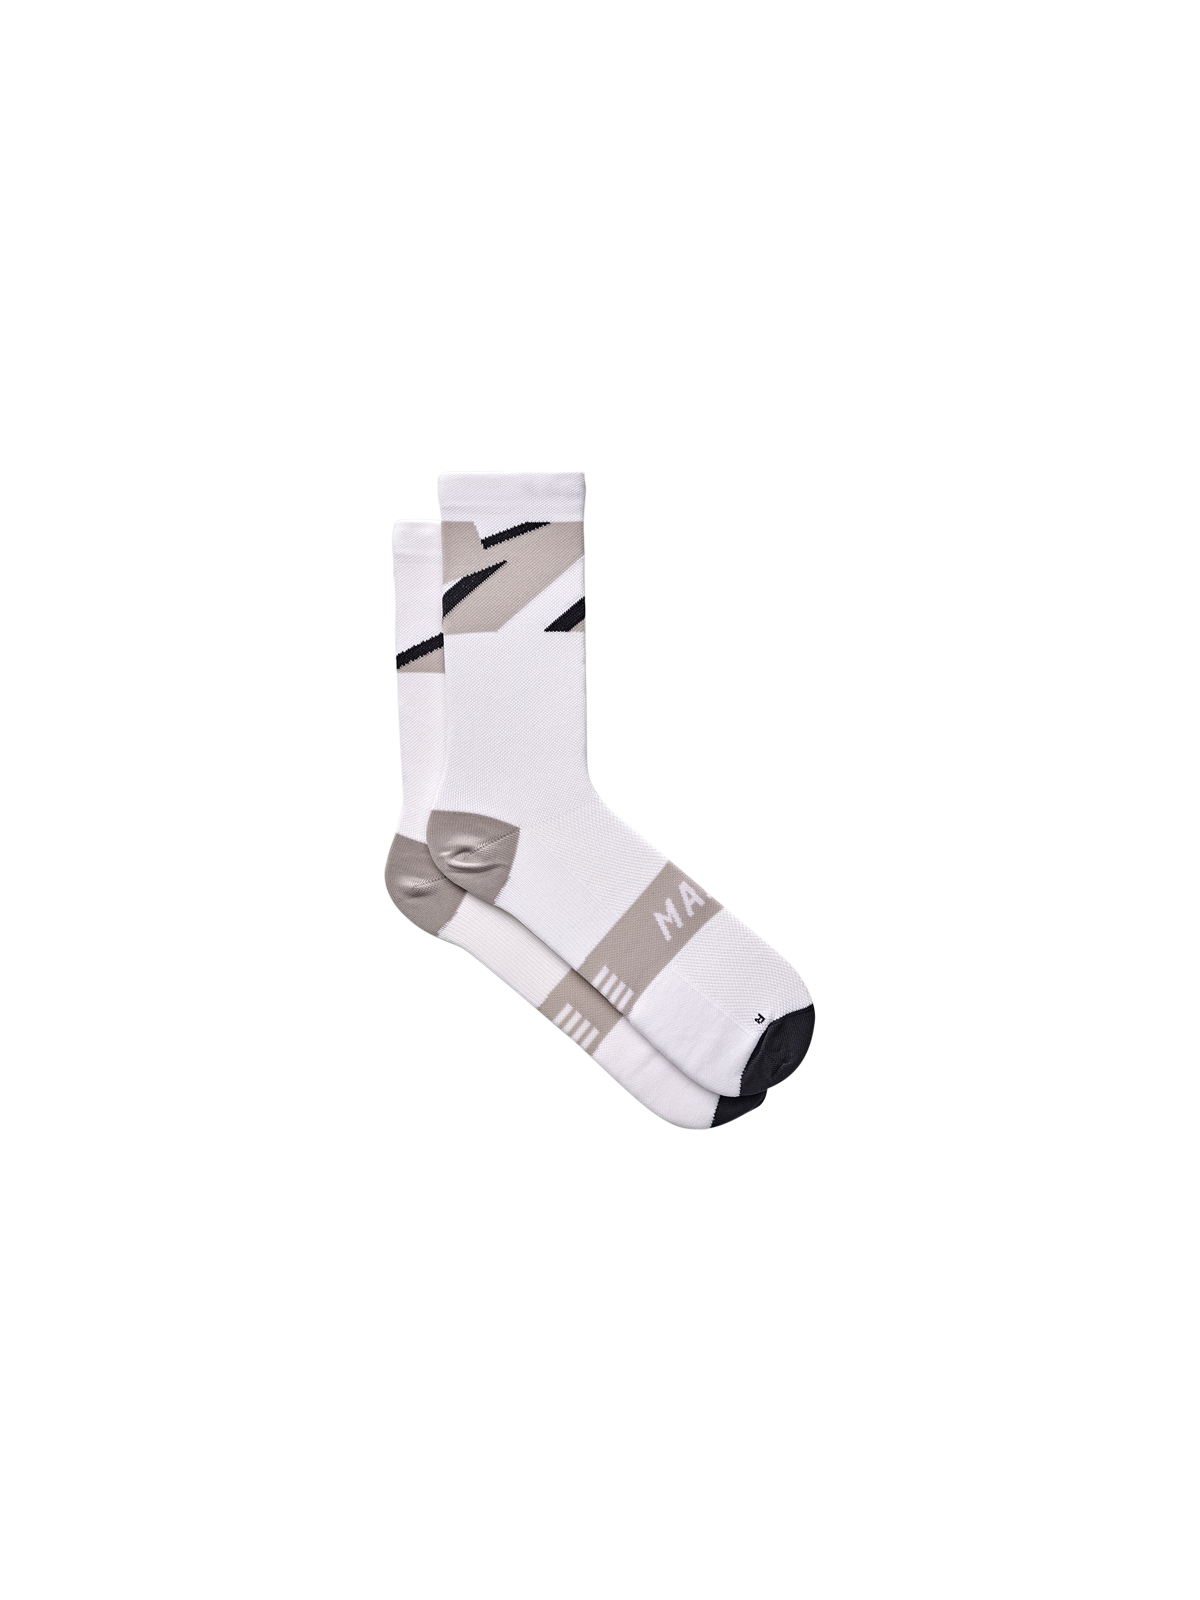 Evolve 3D Sock